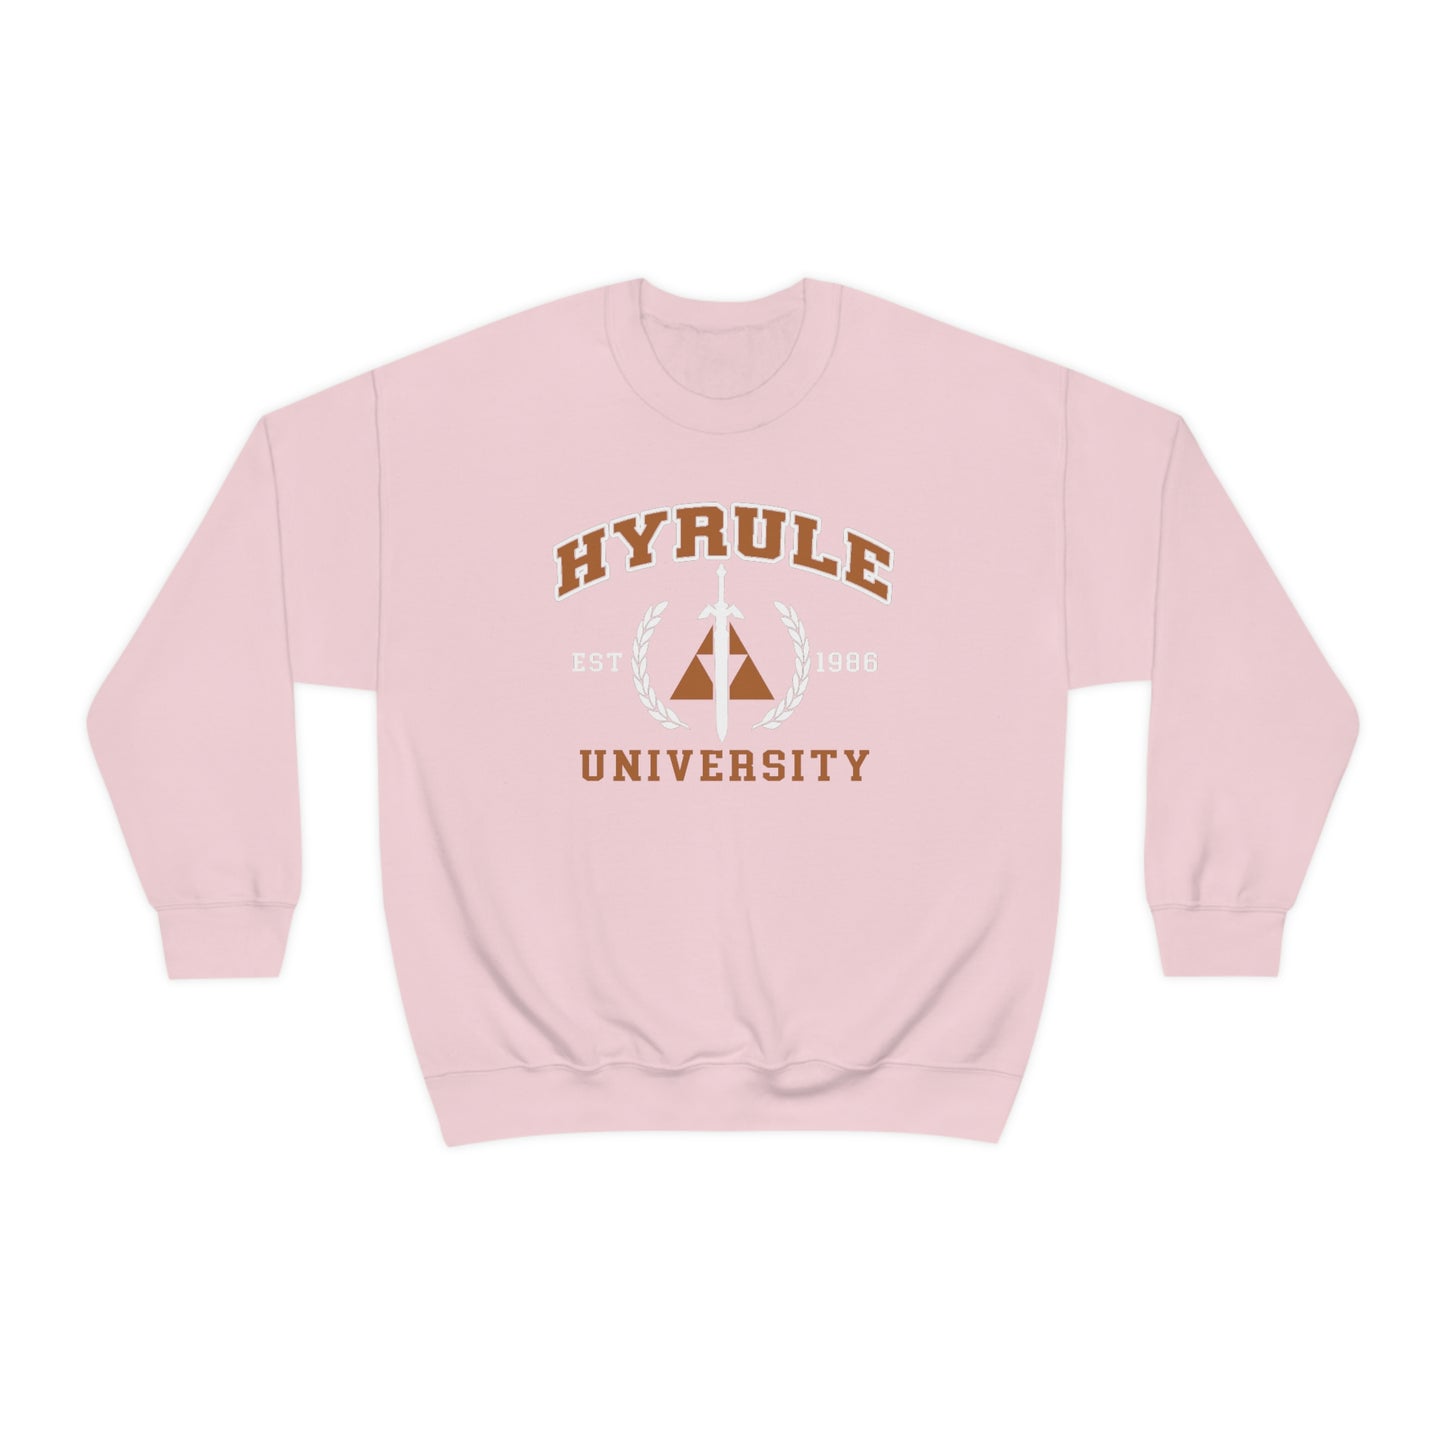 Legend of University sweatshirt